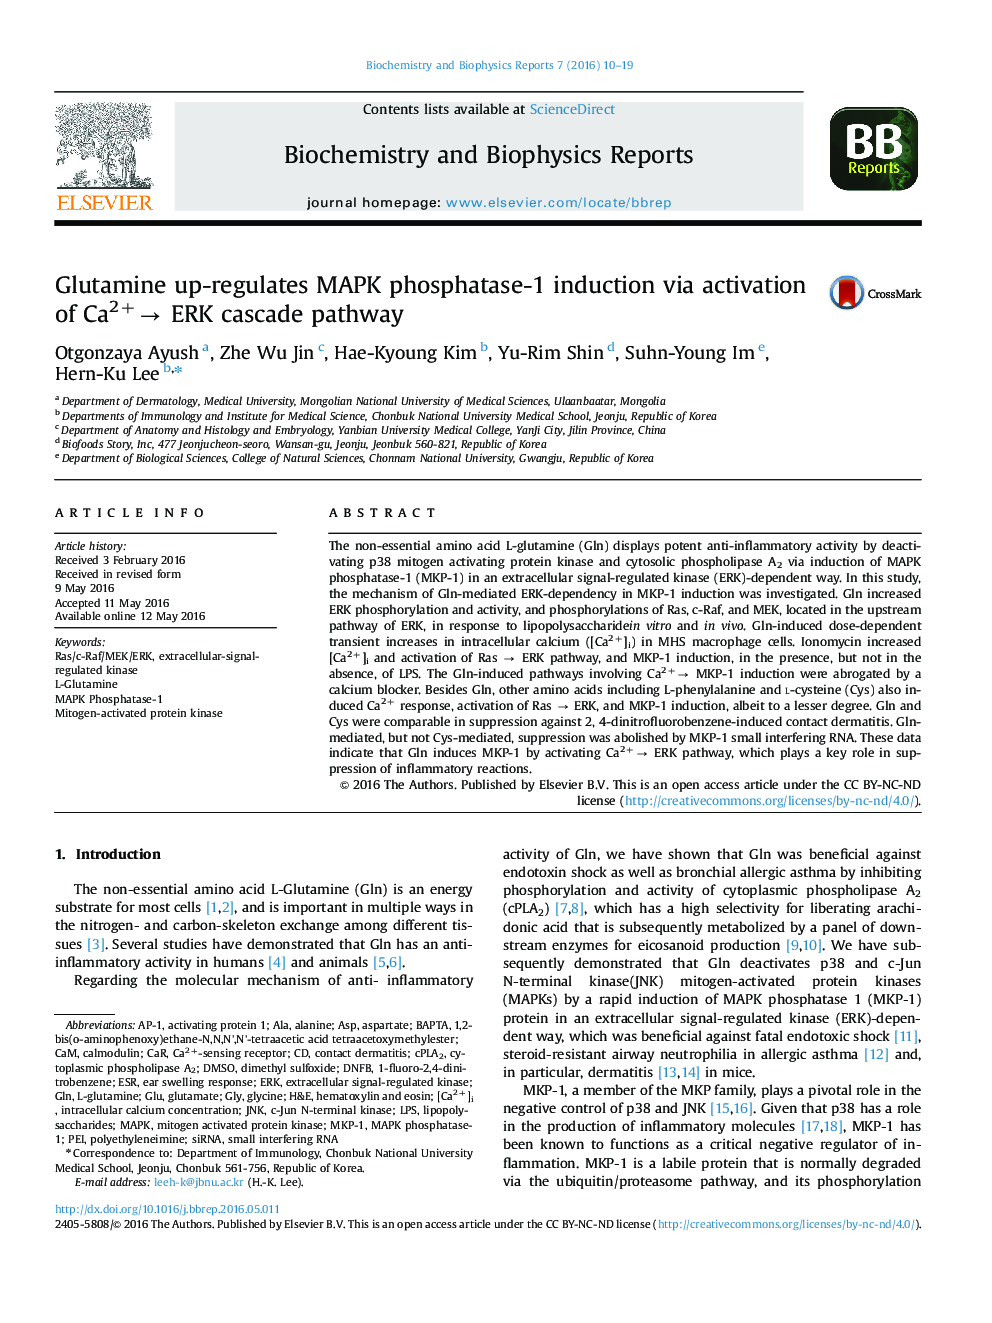 Glutamine up-regulates MAPK phosphatase-1 induction via activation of Ca2+→ ERK cascade pathway